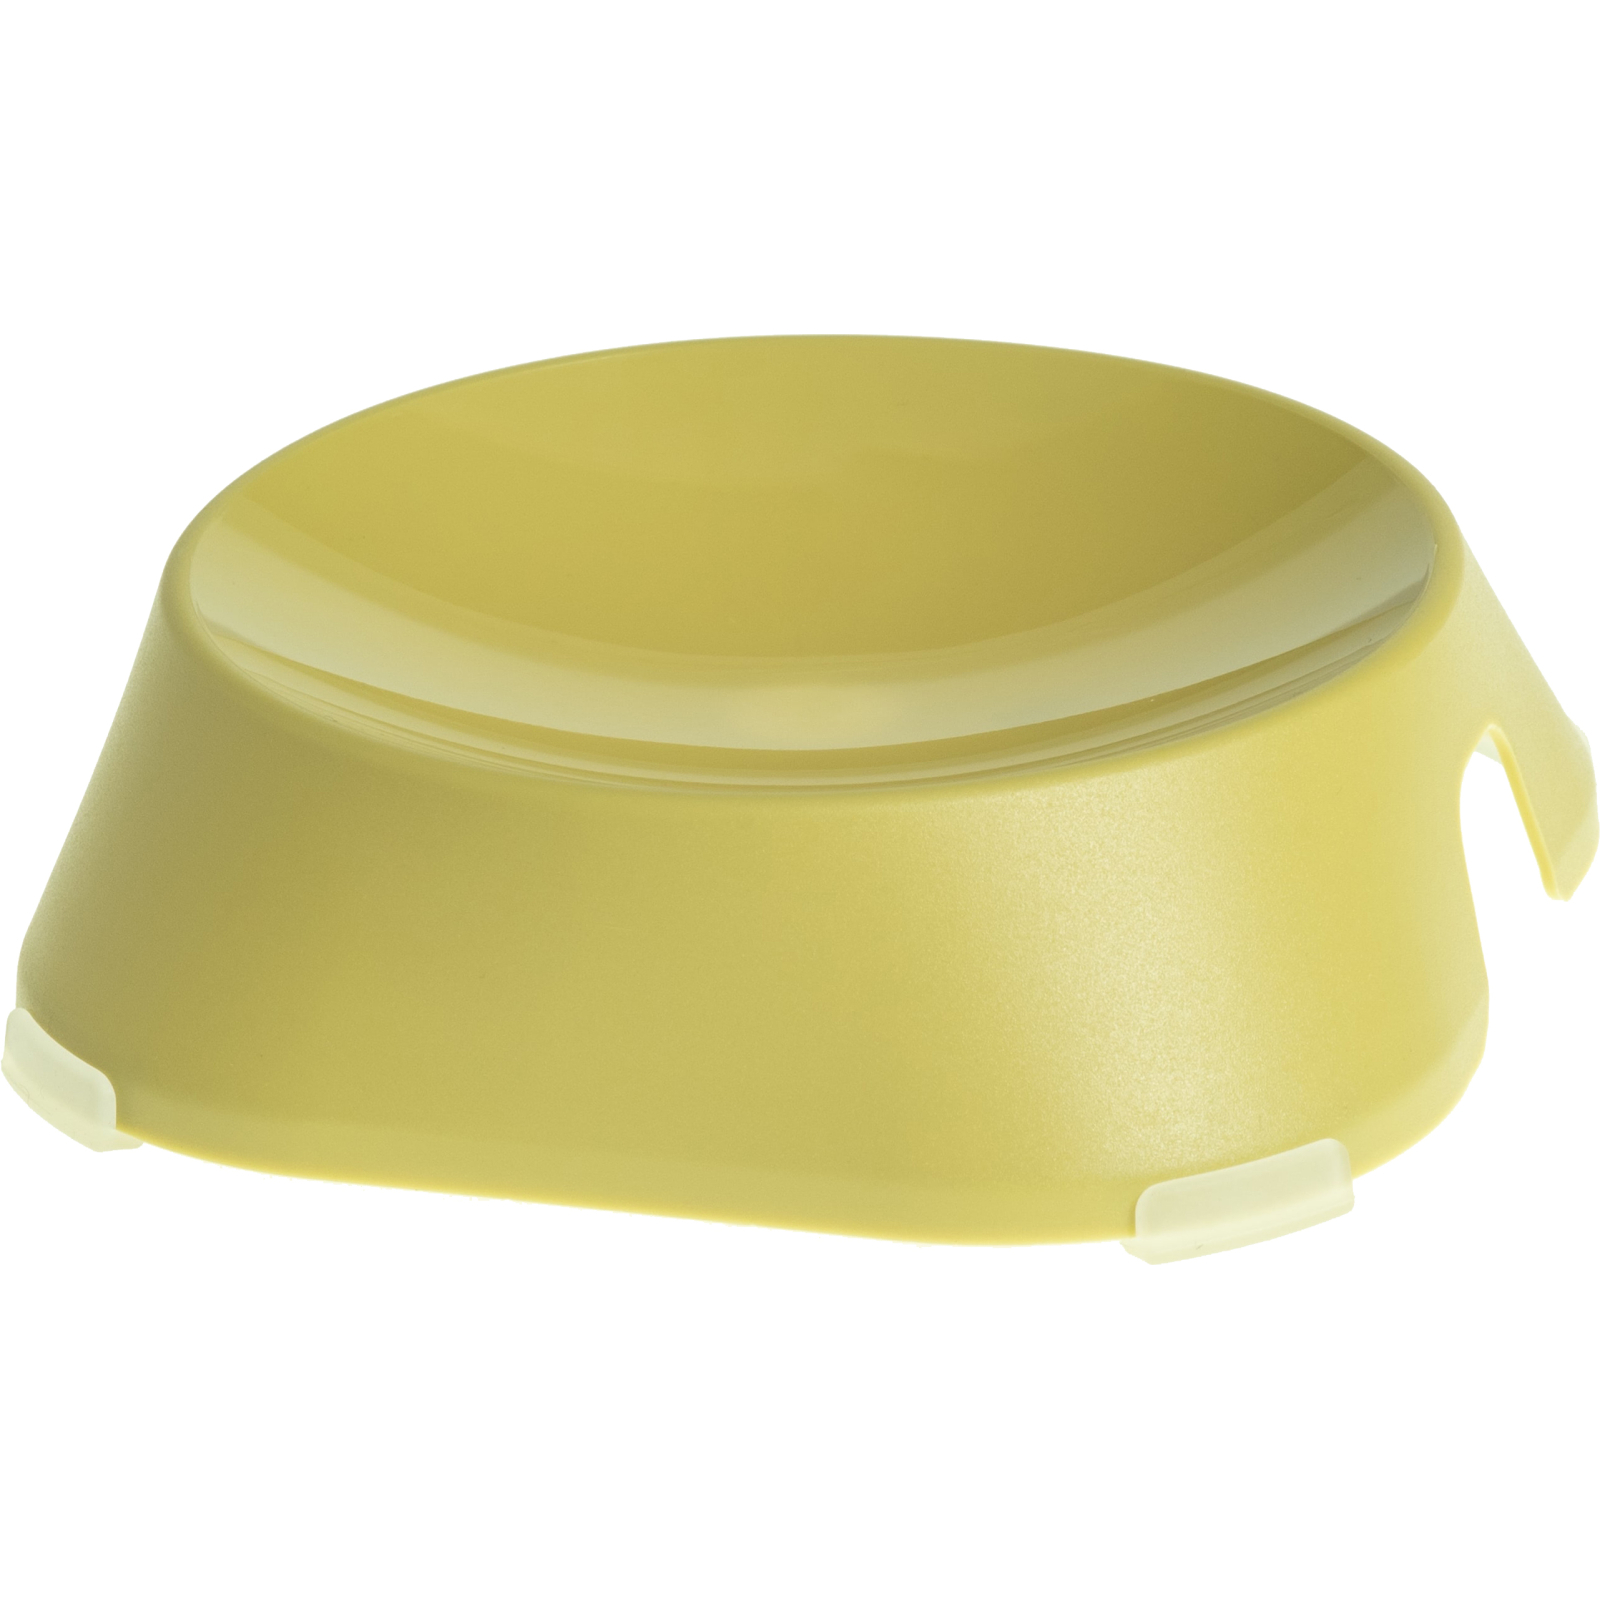 Посуда для кошек Fiboo Flat Bowl миска с антискользящими накладками желтая (FIB0089)